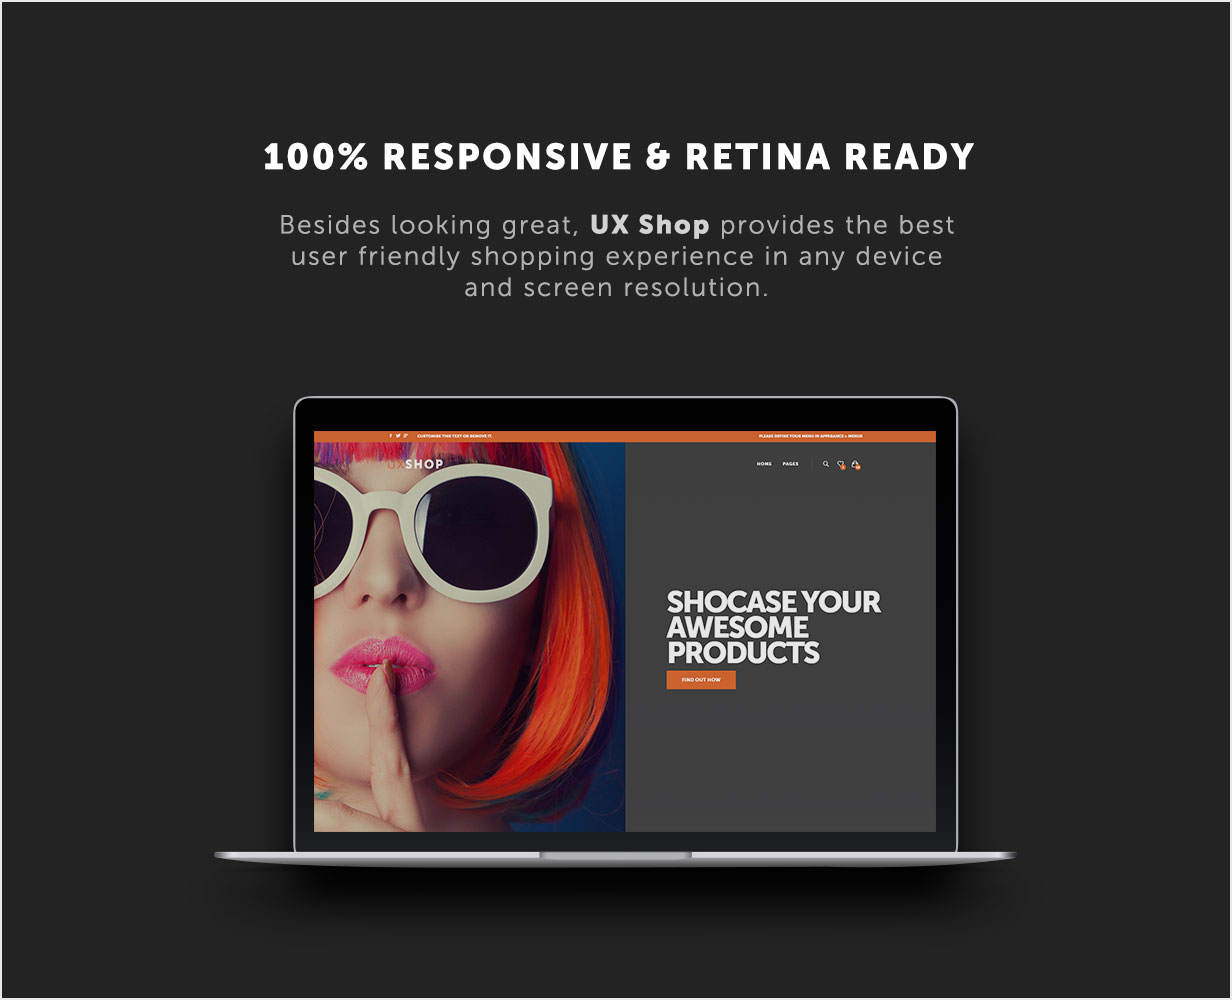 UX Shop WooCommerce theme - Responsive and retina ready